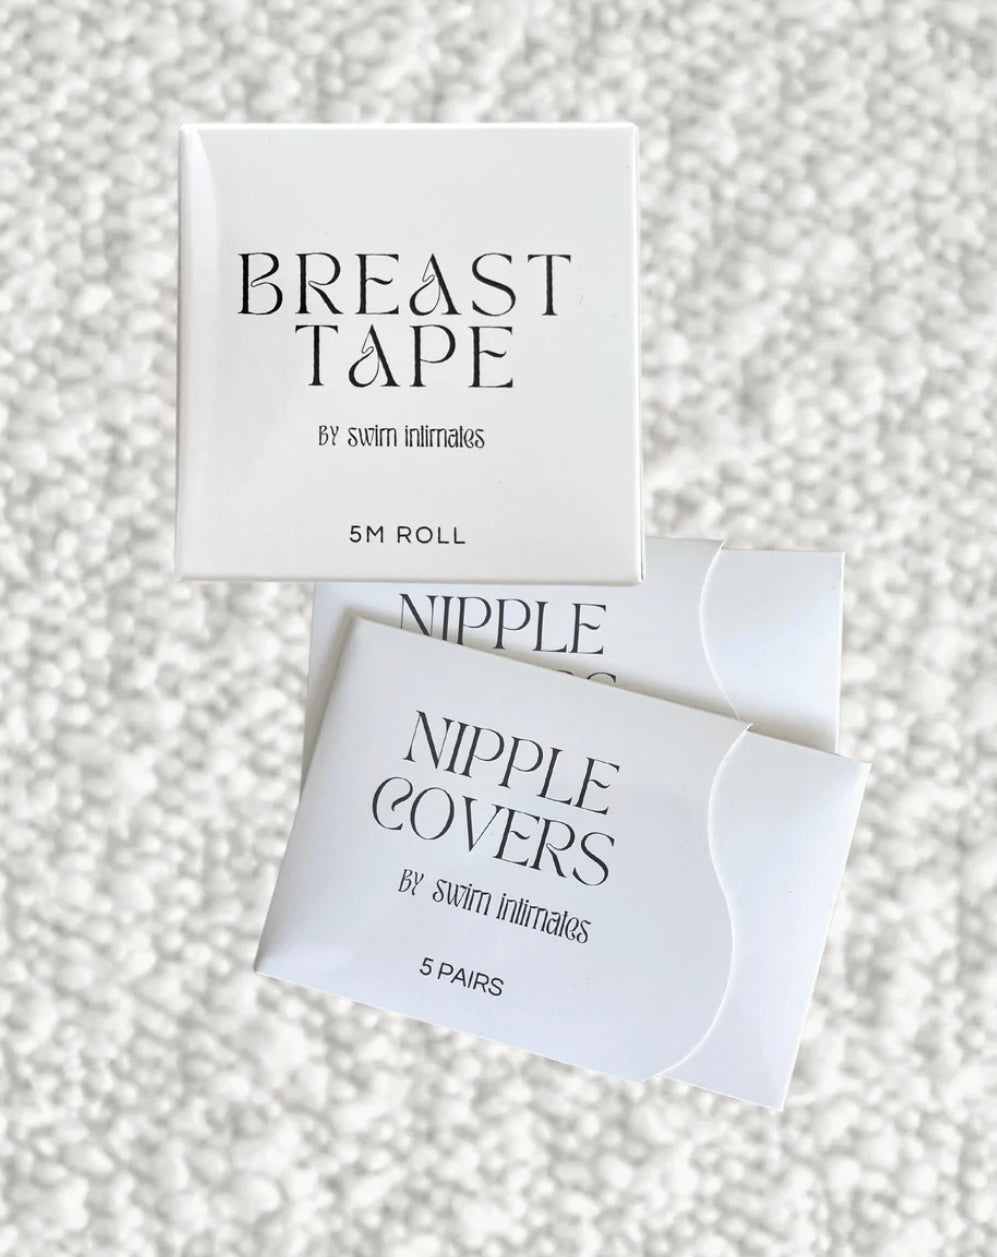 Breast Tape by Swim Intimates